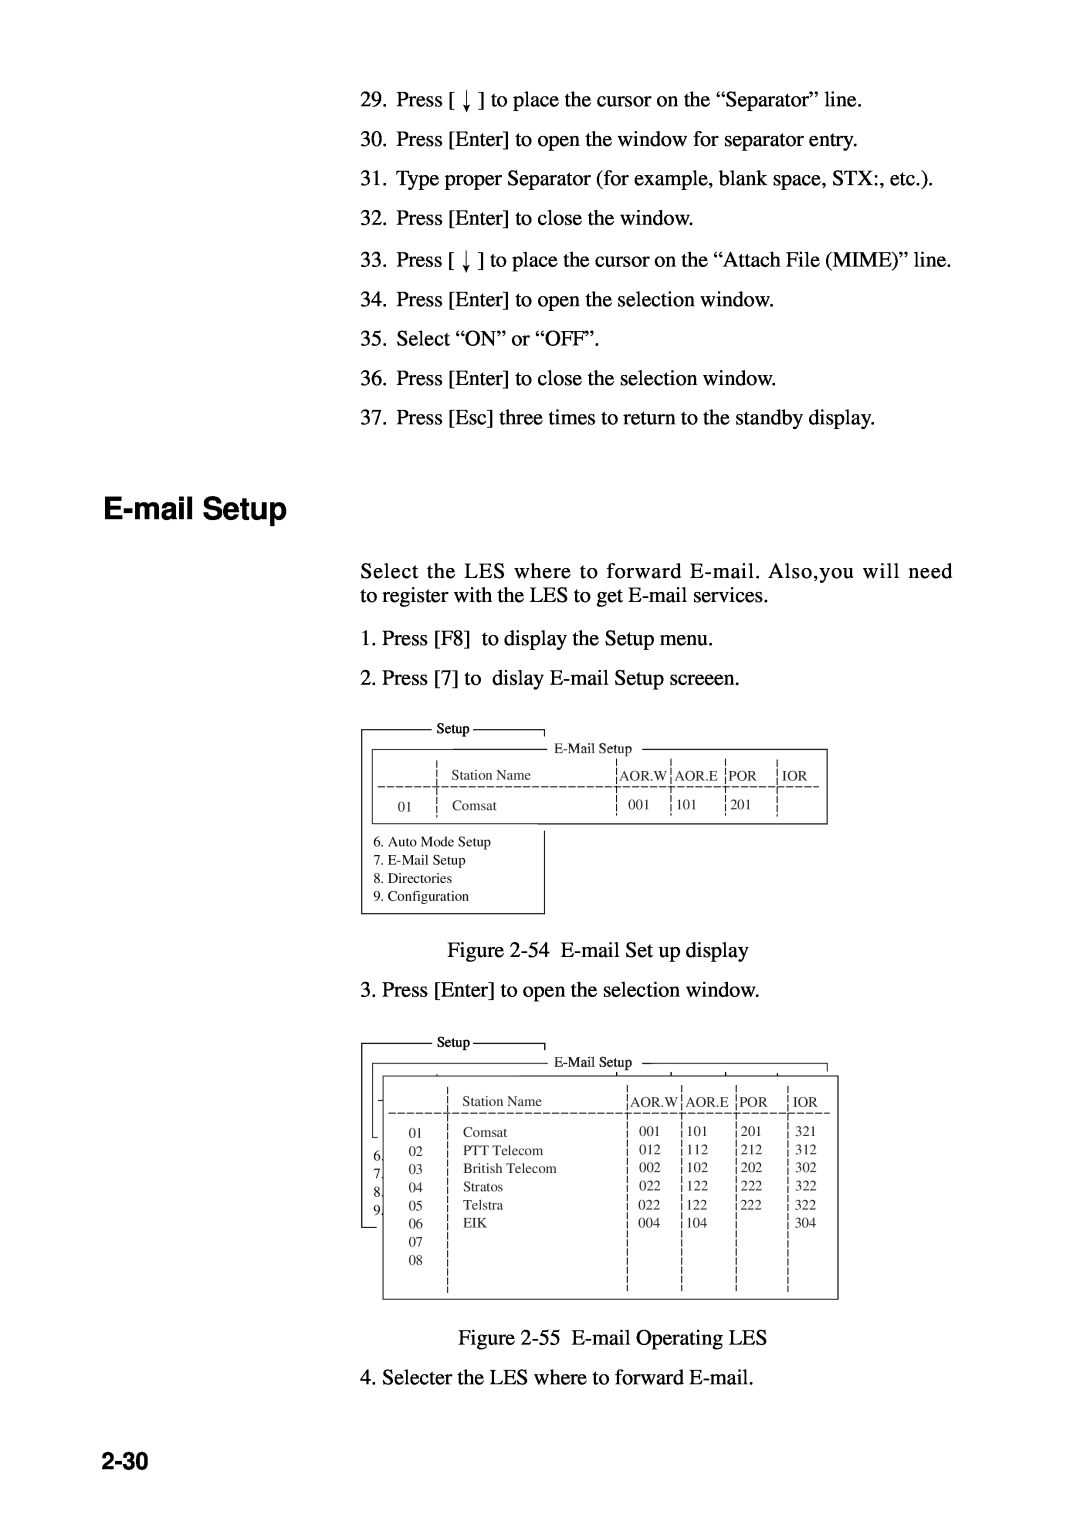 Furuno RC-1500-1T manual E-mail Setup, 2-30 